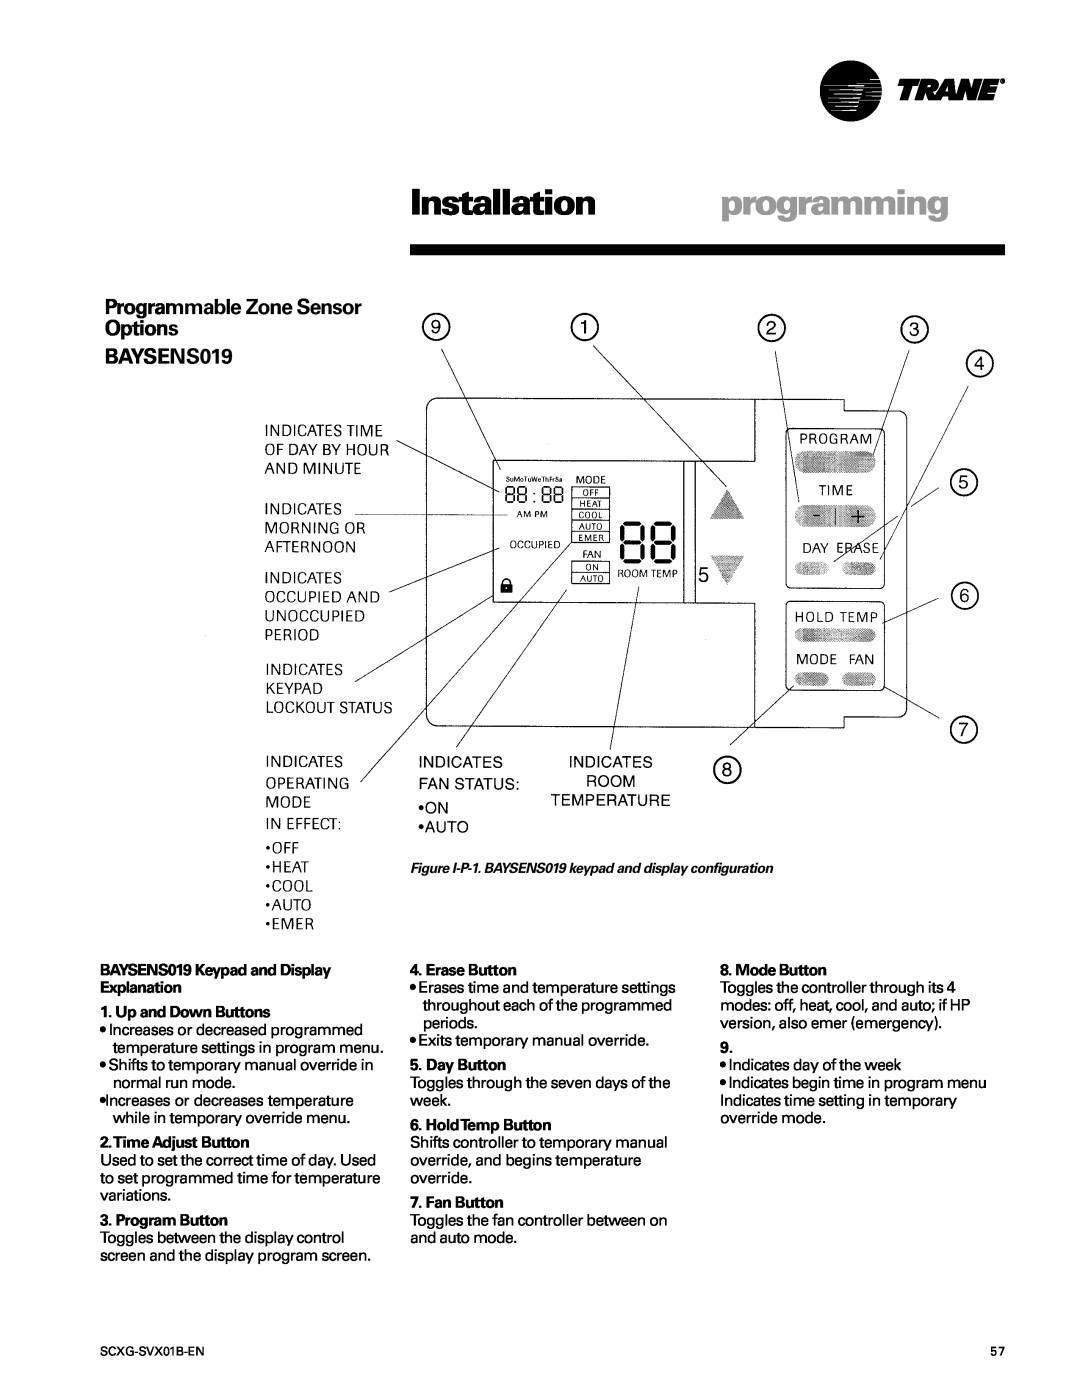 Trane SCXG-SVX01B-EN manual Installation programming, Programmable Zone Sensor Options BAYSENS019, Up and Down Buttons 